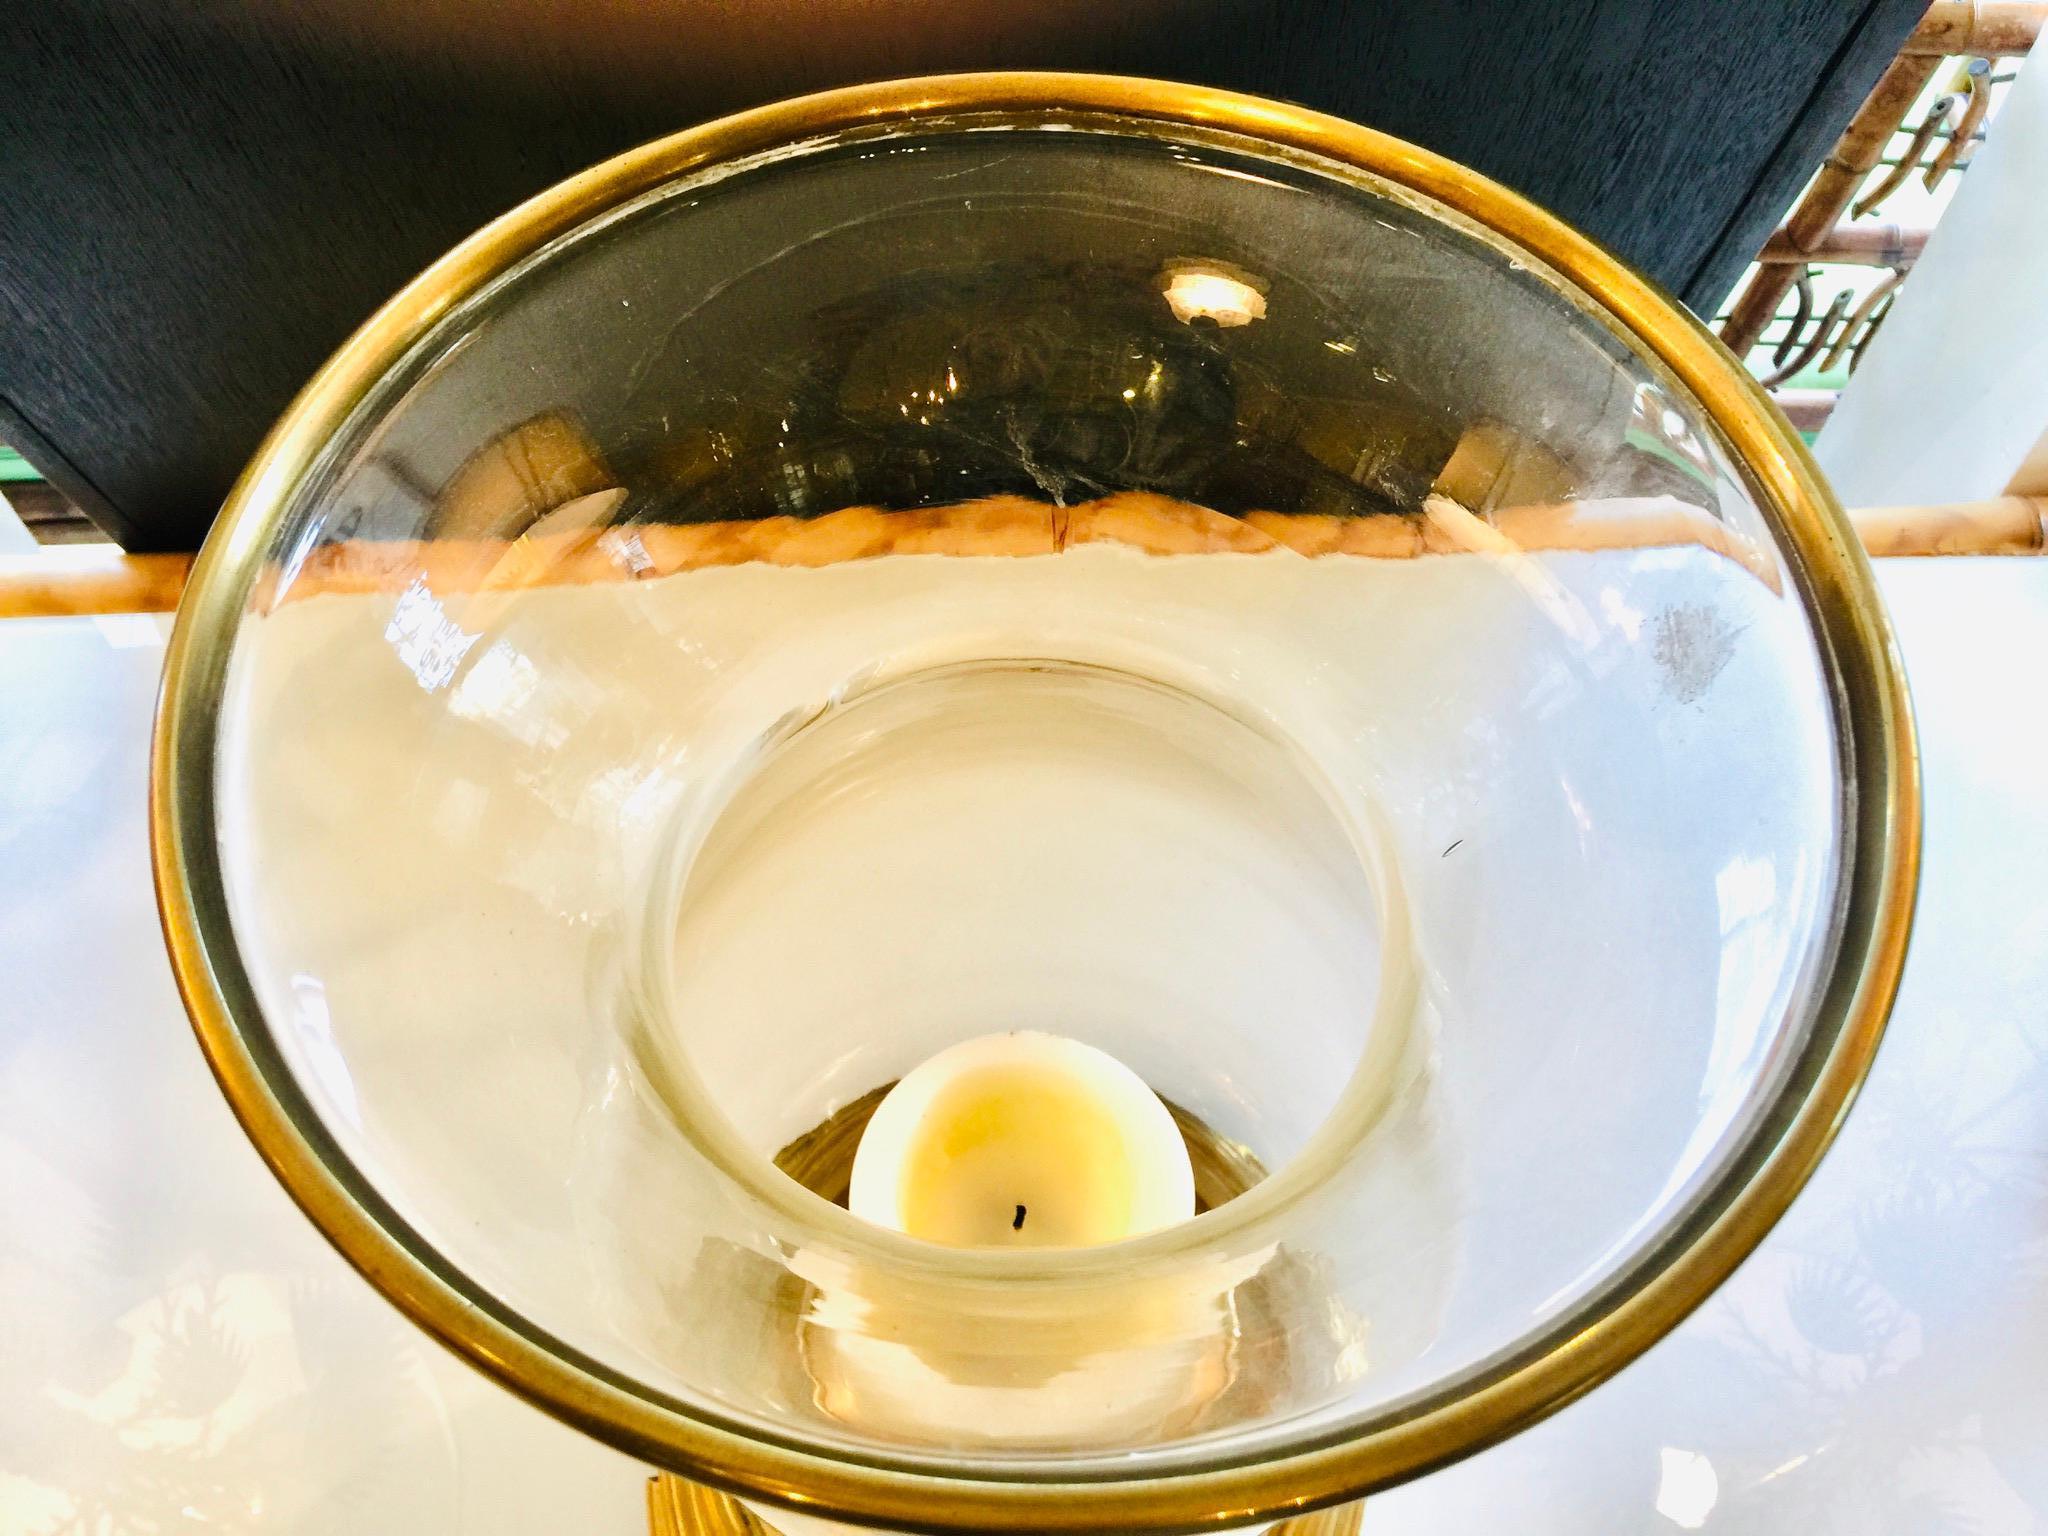 Regency Revival American Midcentury Brass and Glass Hurricane Candleholder